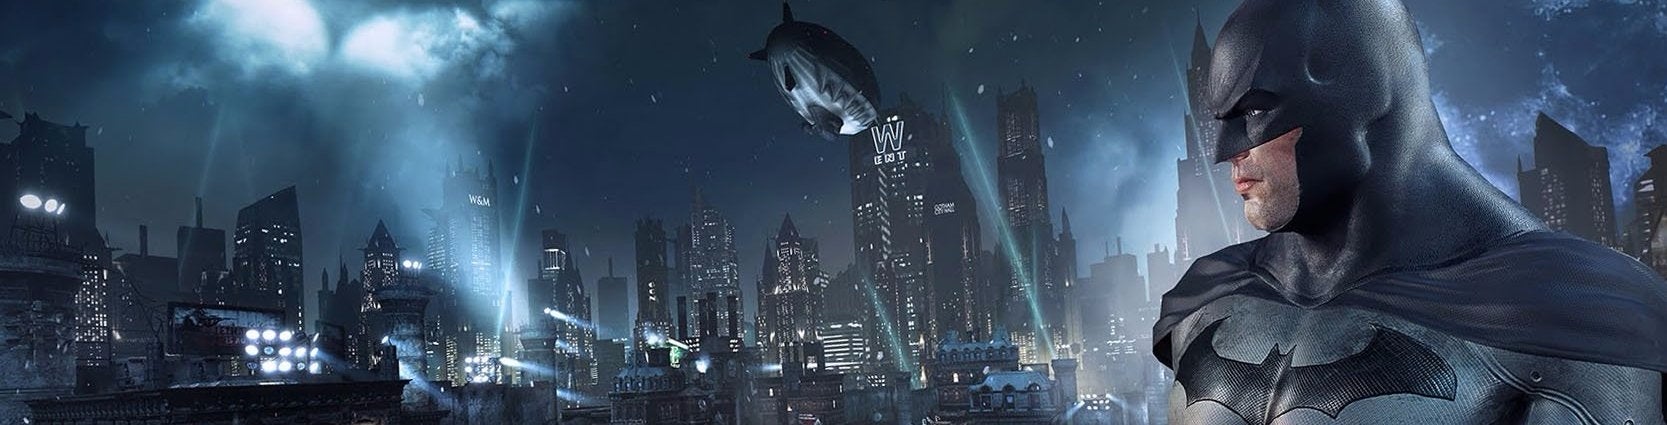 Immagine di Batman: Return to Arkham - analisi comparativa